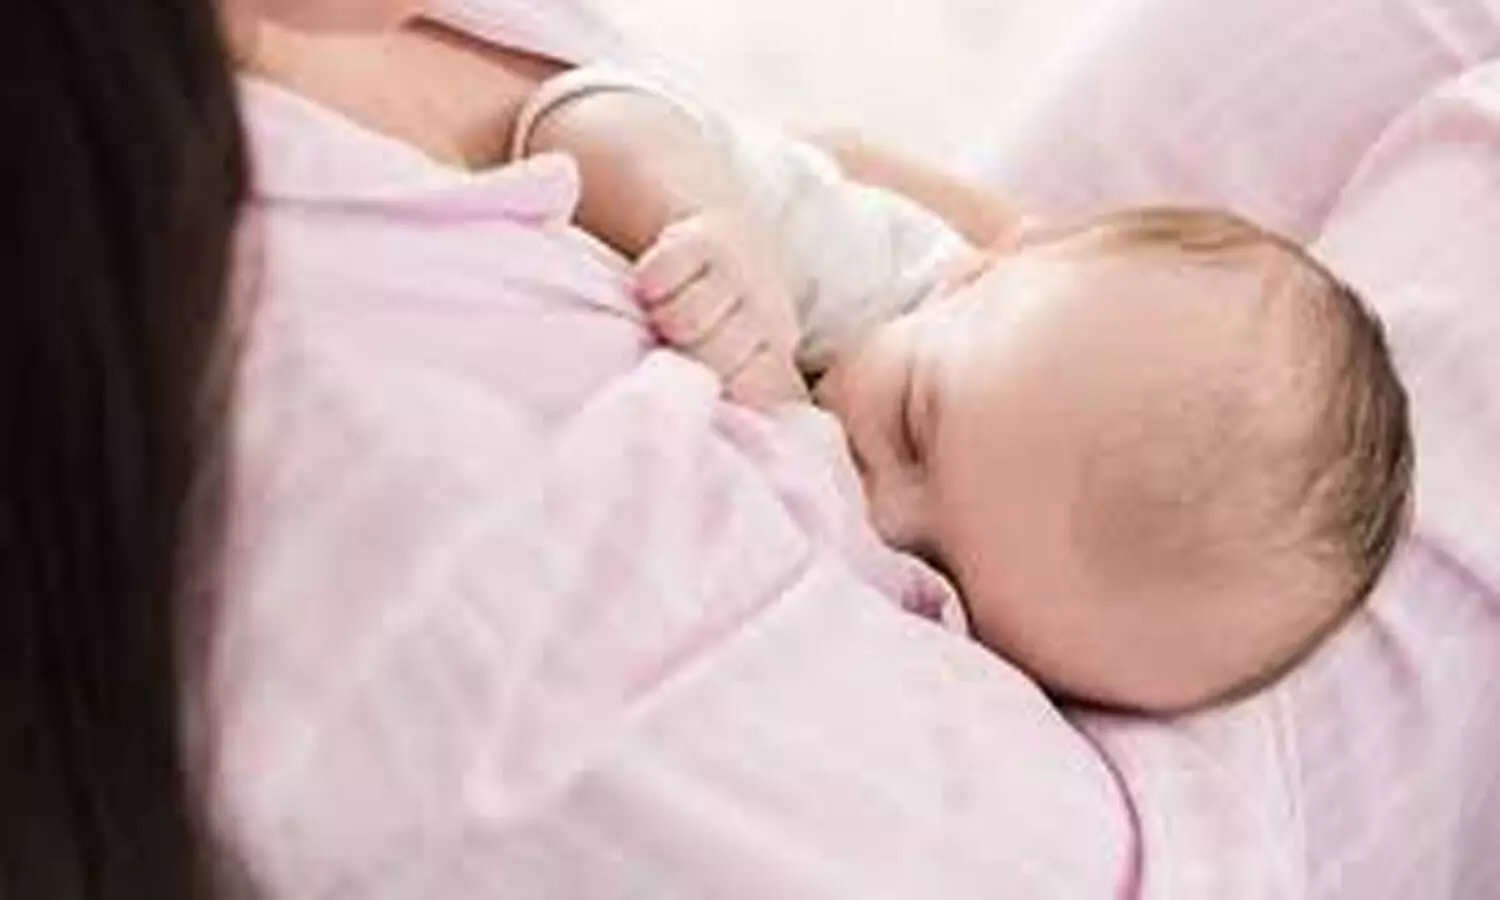 Breastfeeding moms exposure to nicotine may retard craniofacial growth of infants